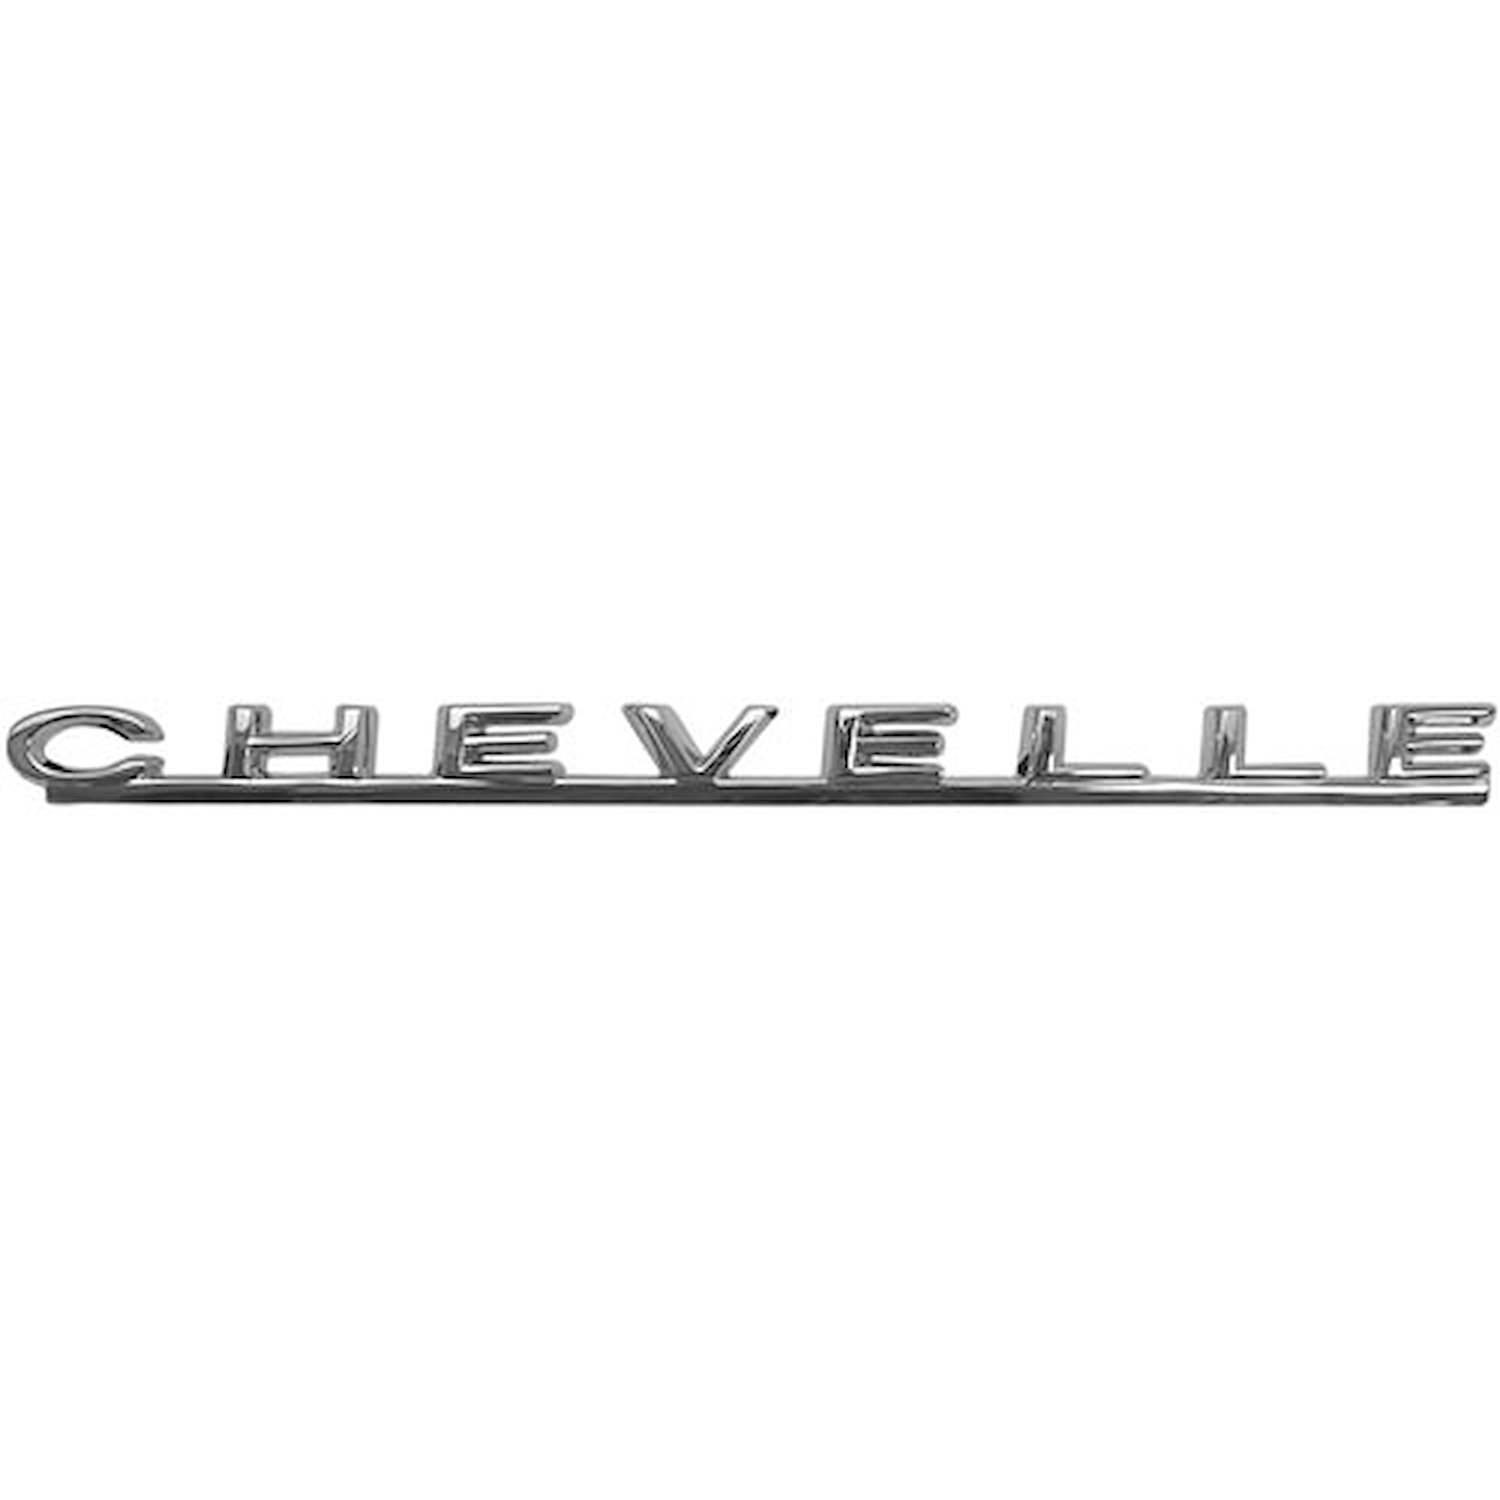 Hood Emblem 1967 Chevy Chevelle